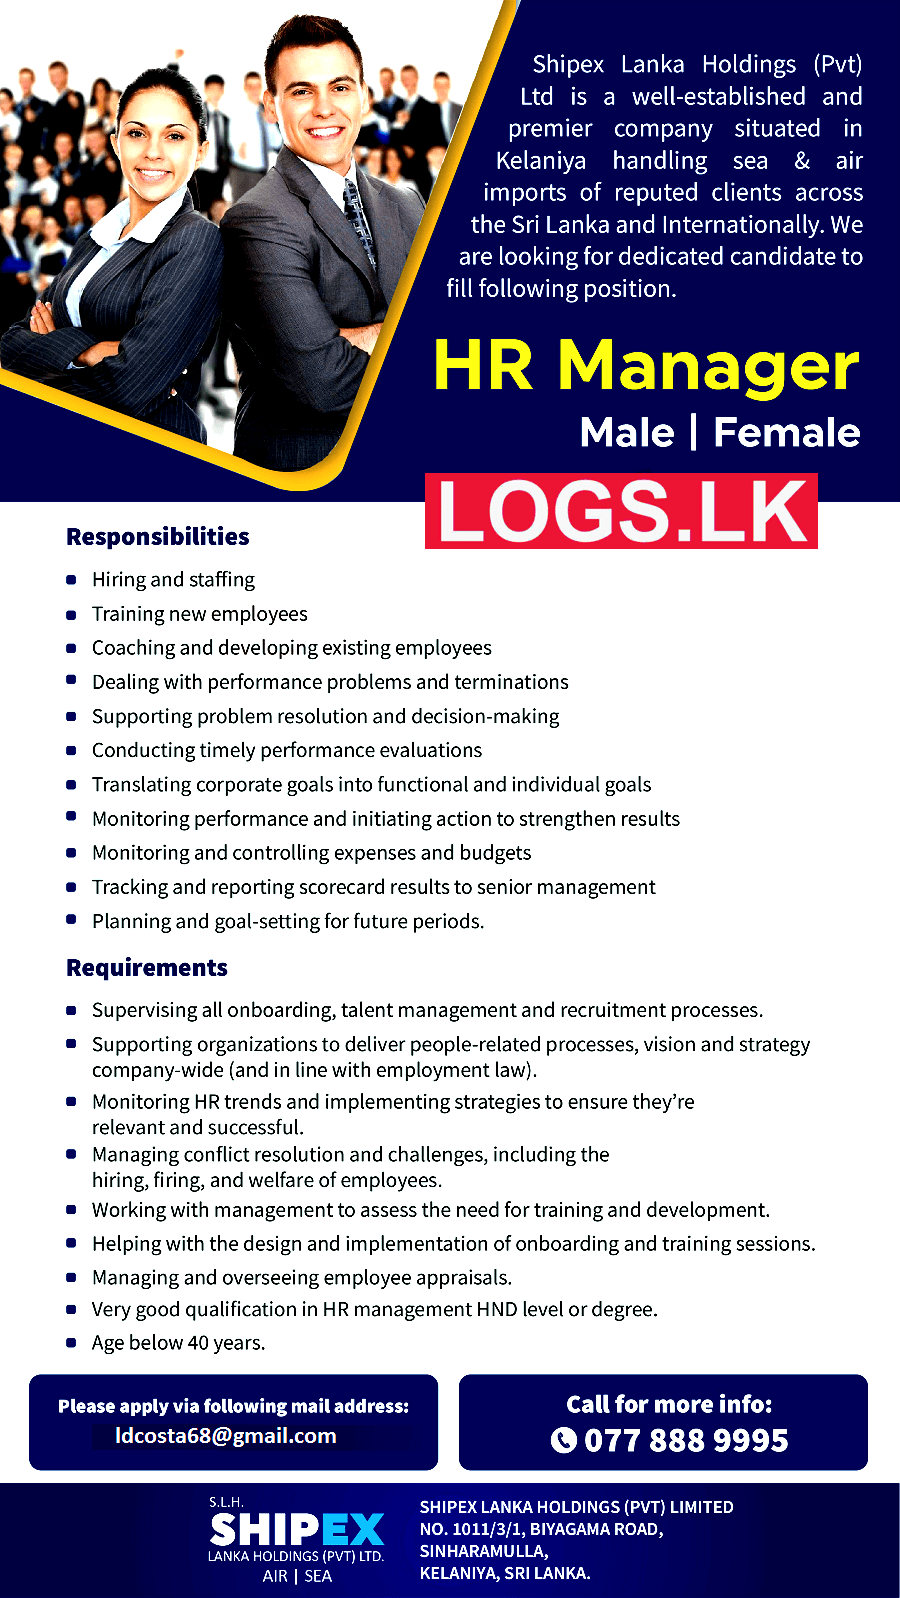 HR Manager - Male / Female Vacancy at Shipex Lanka Holdings Job Vacancies